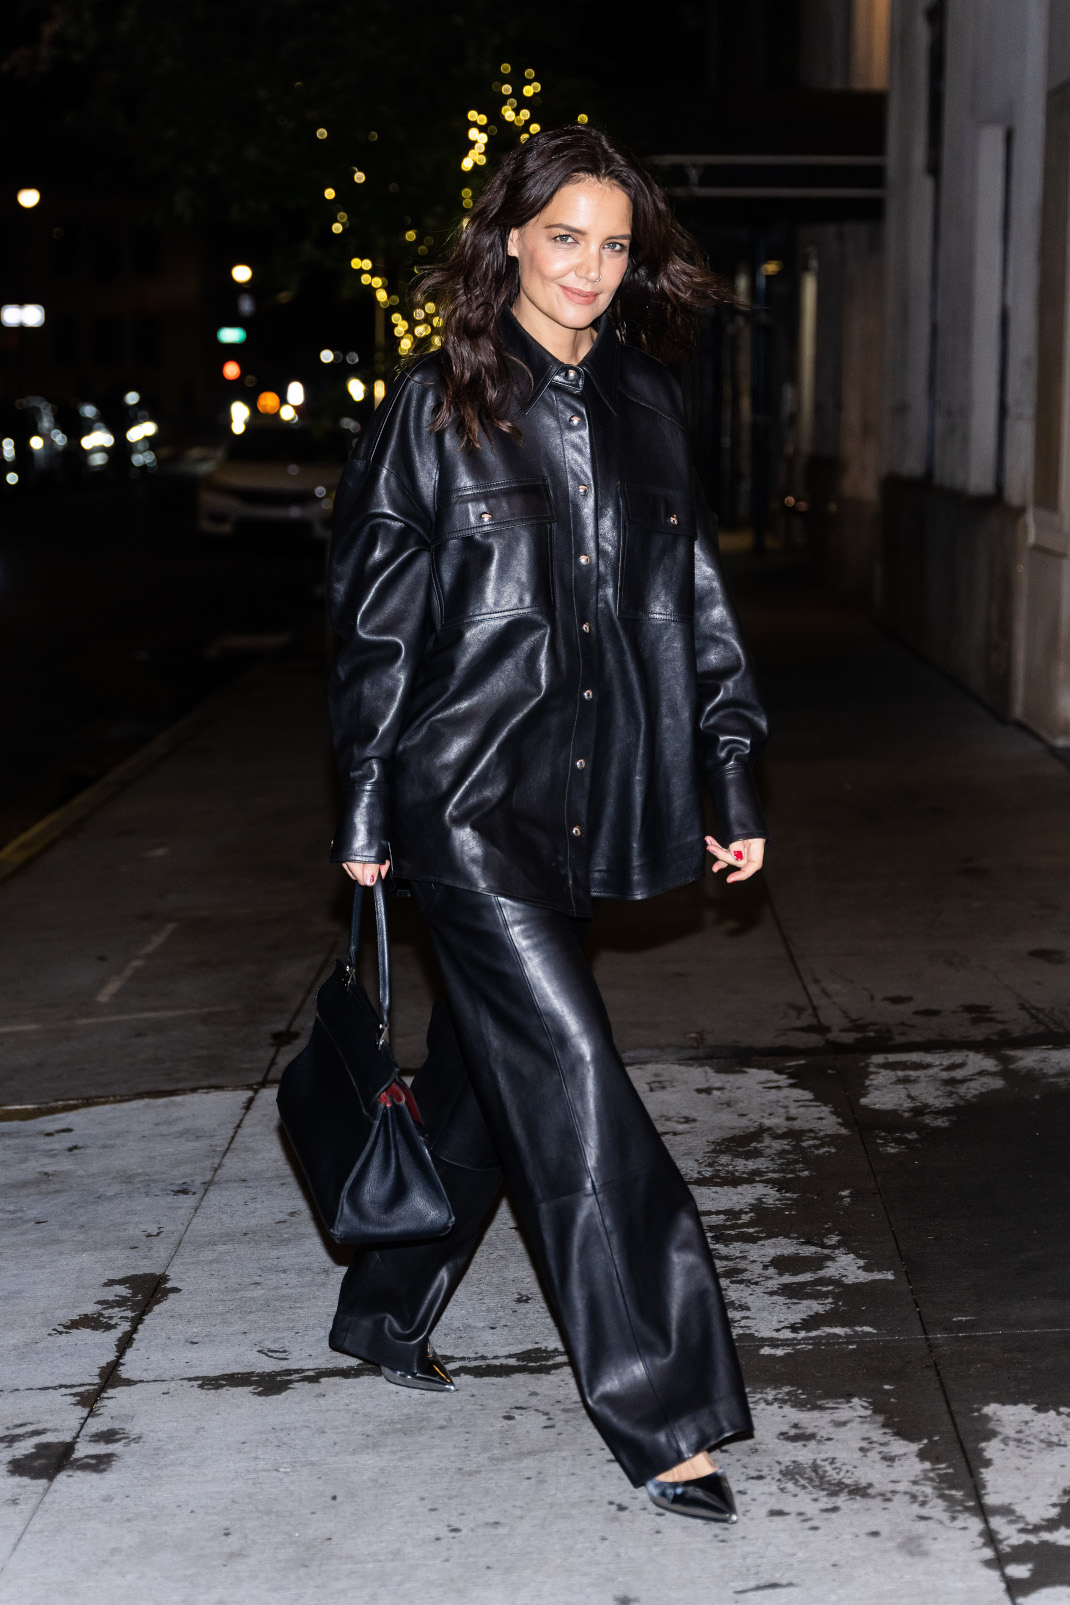 H Κέιτι Χολμς με total black look -Το δερμάτινο outfit που φόρεσε με τον πιo fashionable τρόπο 